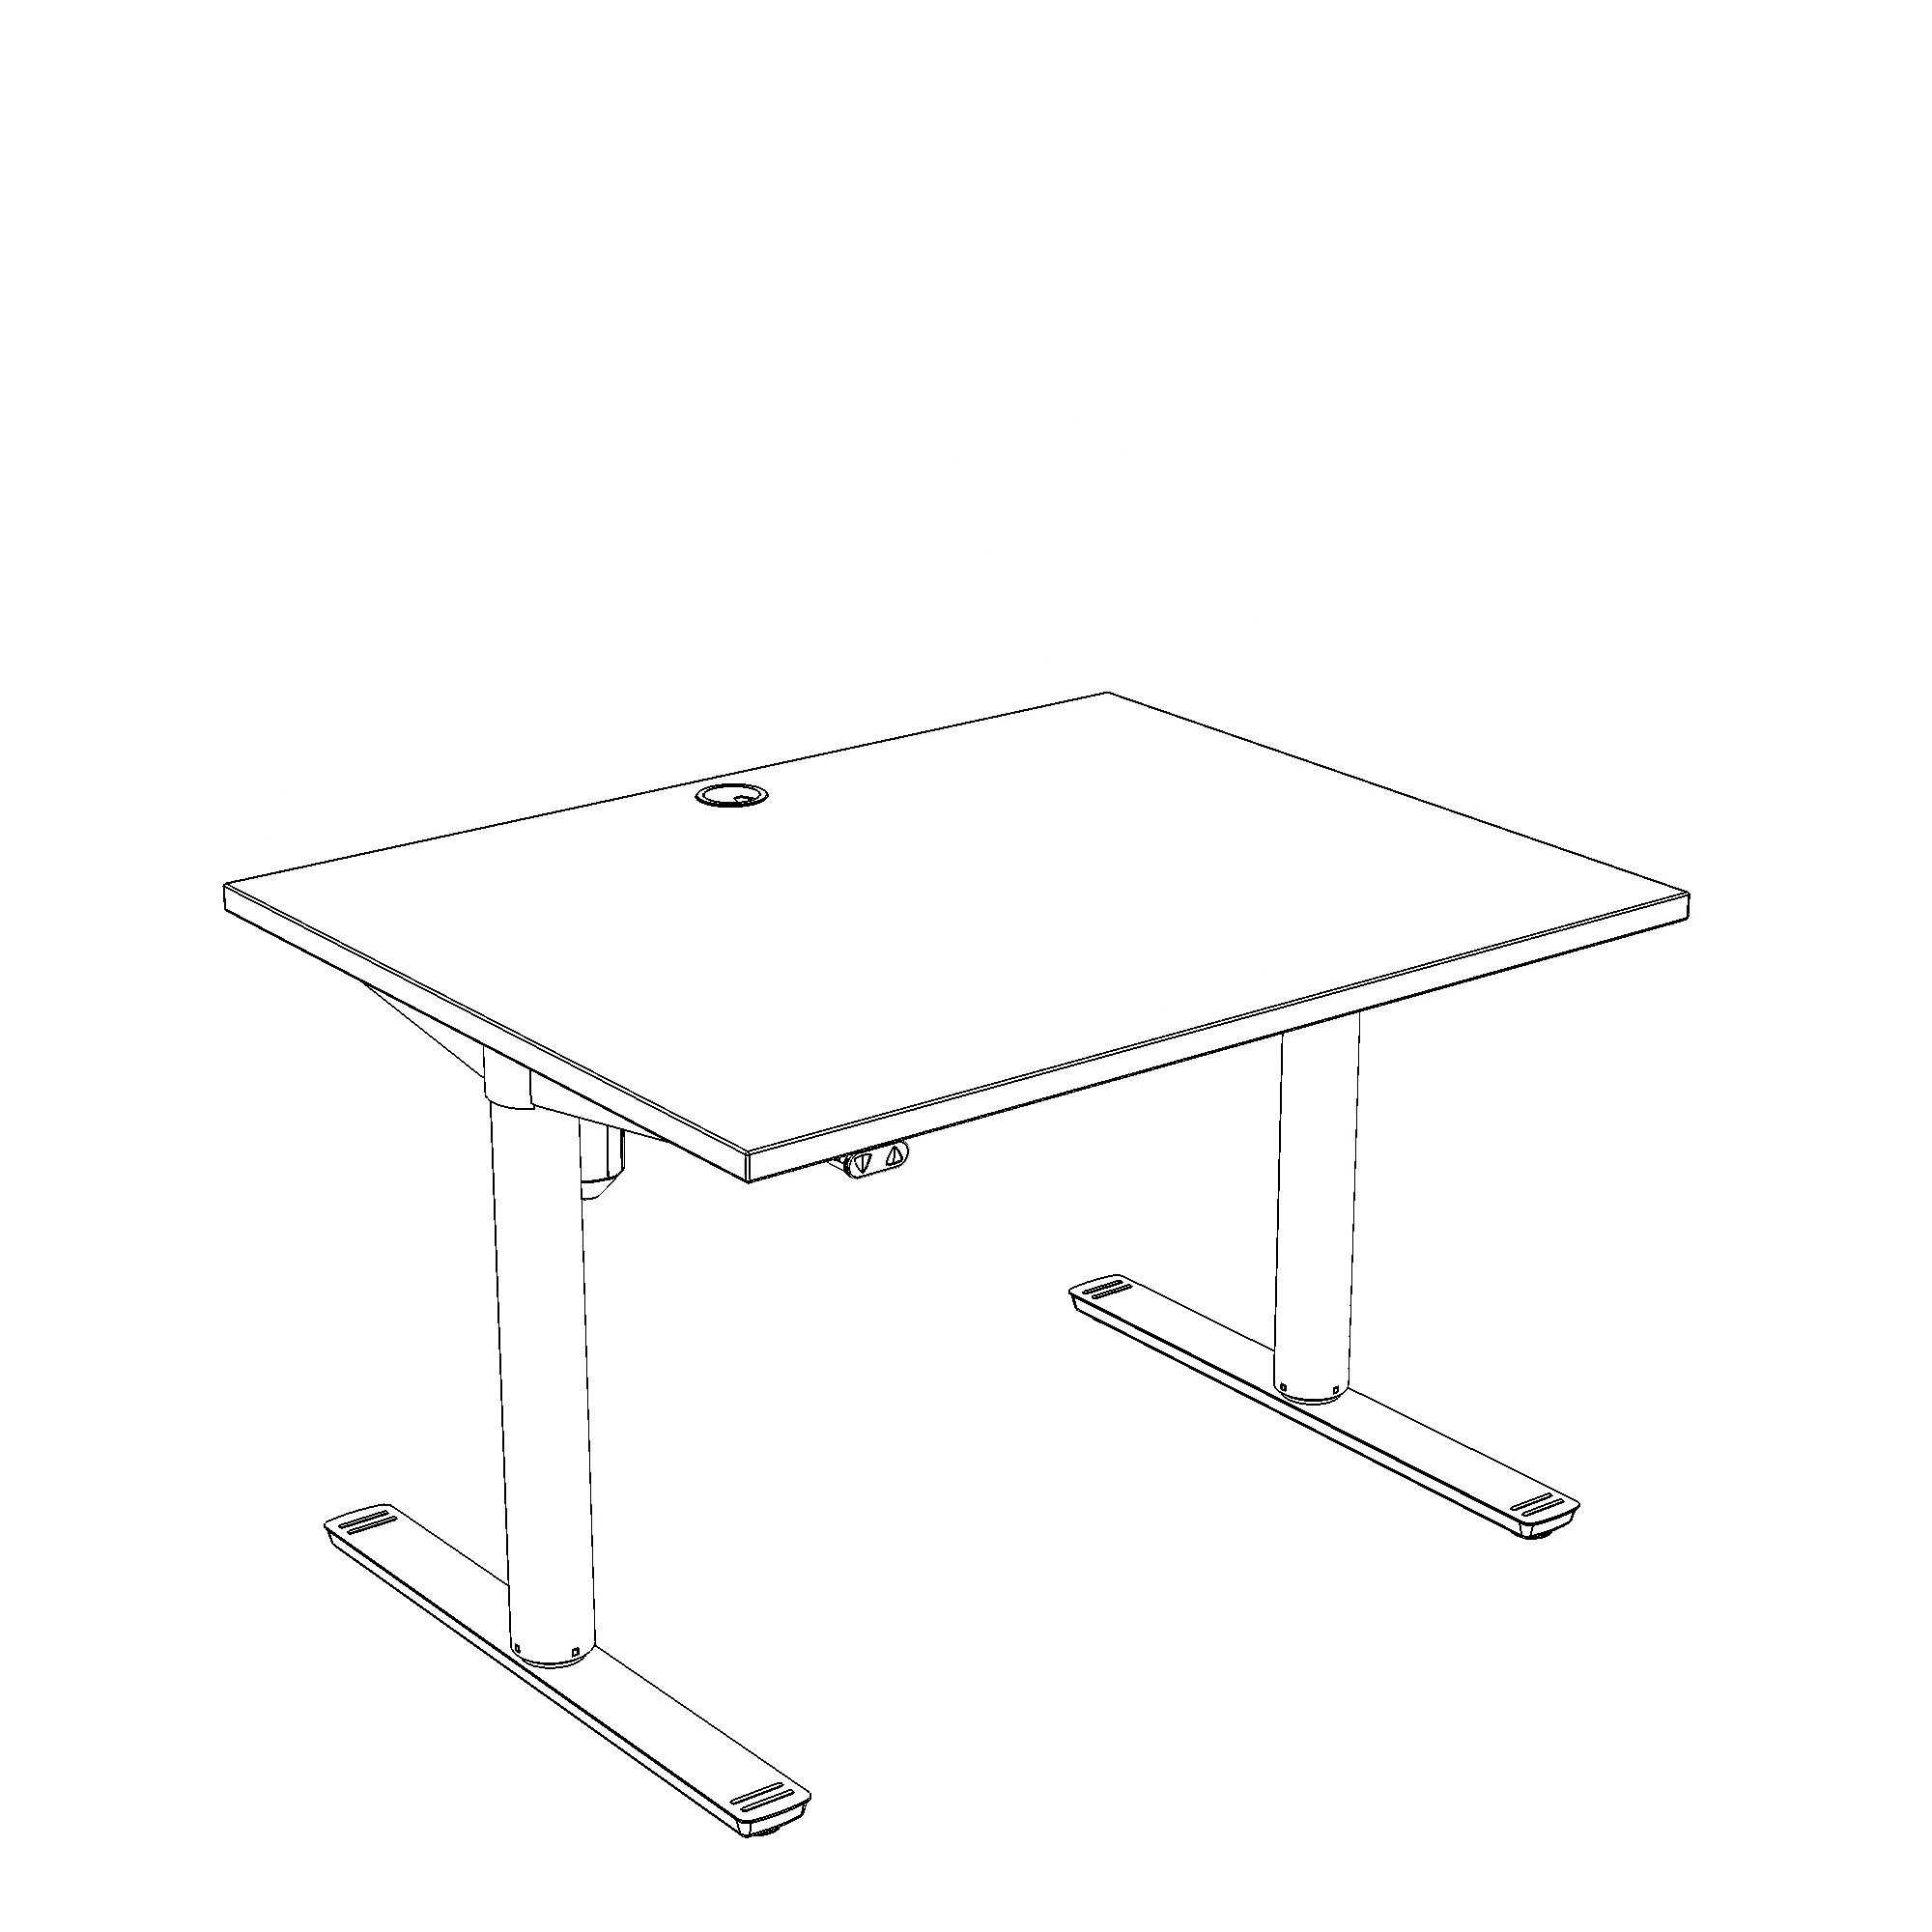 Electric Adjustable Desk | 100x80 cm | Beech with black frame